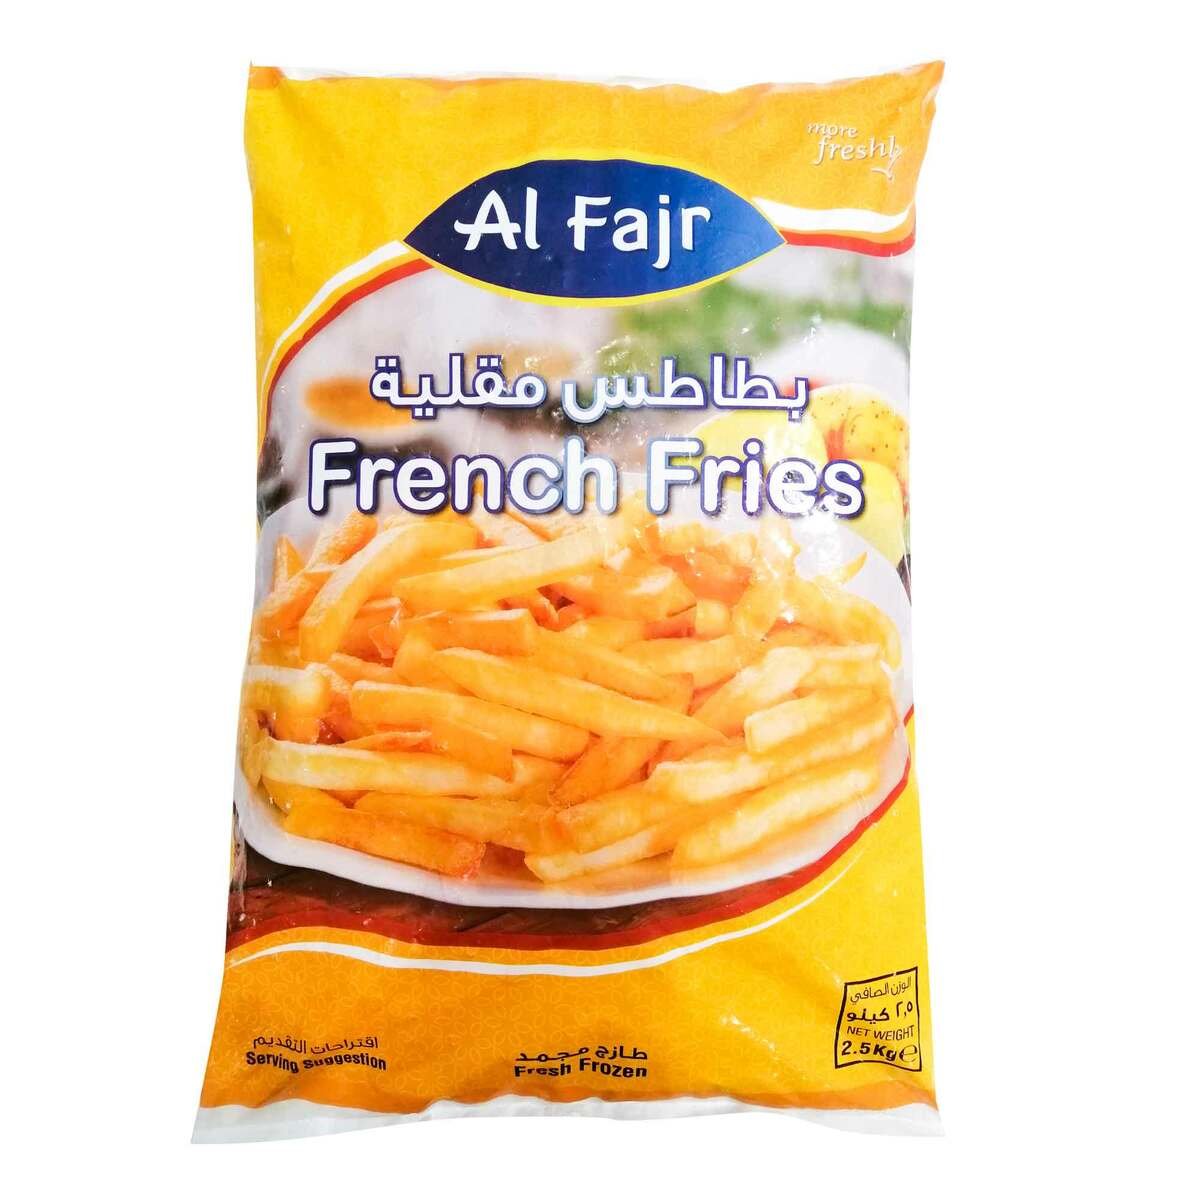 Al Fajr French Fries 2.5kg